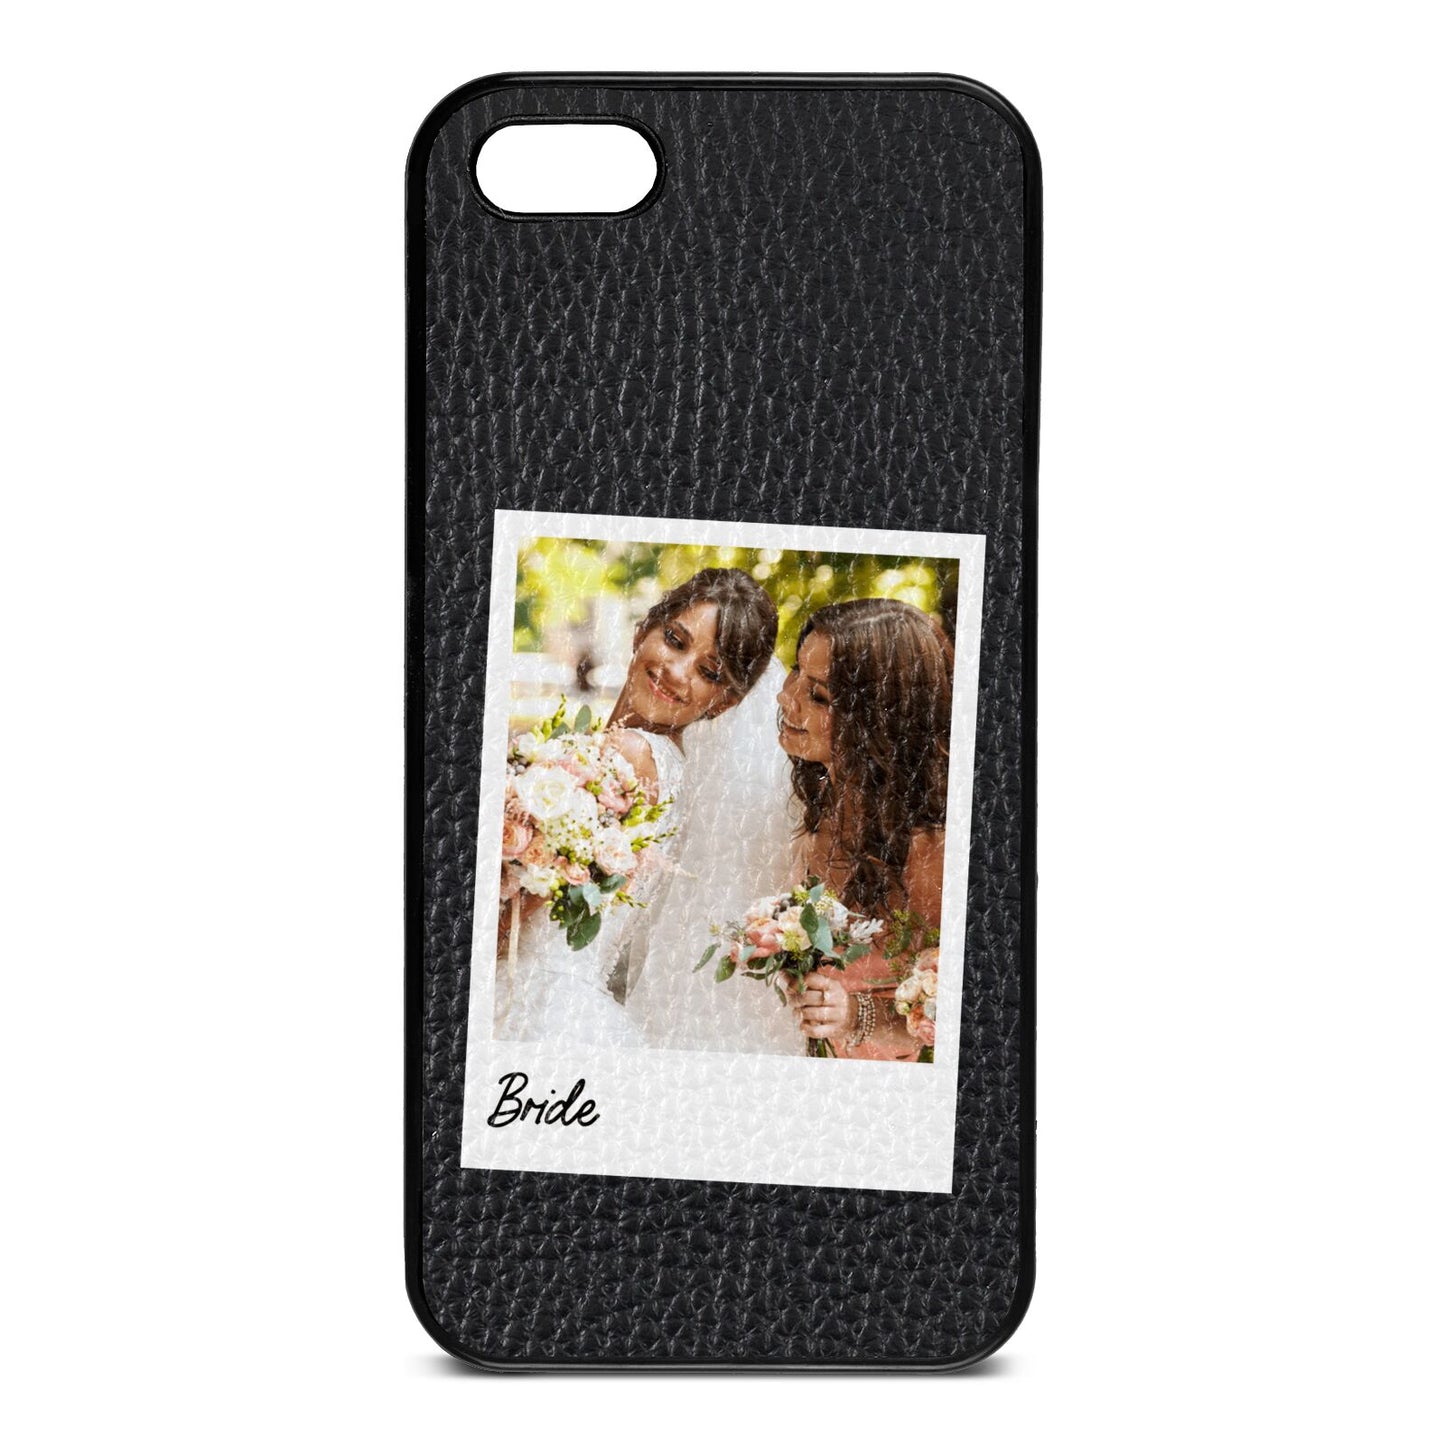 Bridal Photo Black Pebble Leather iPhone 5 Case